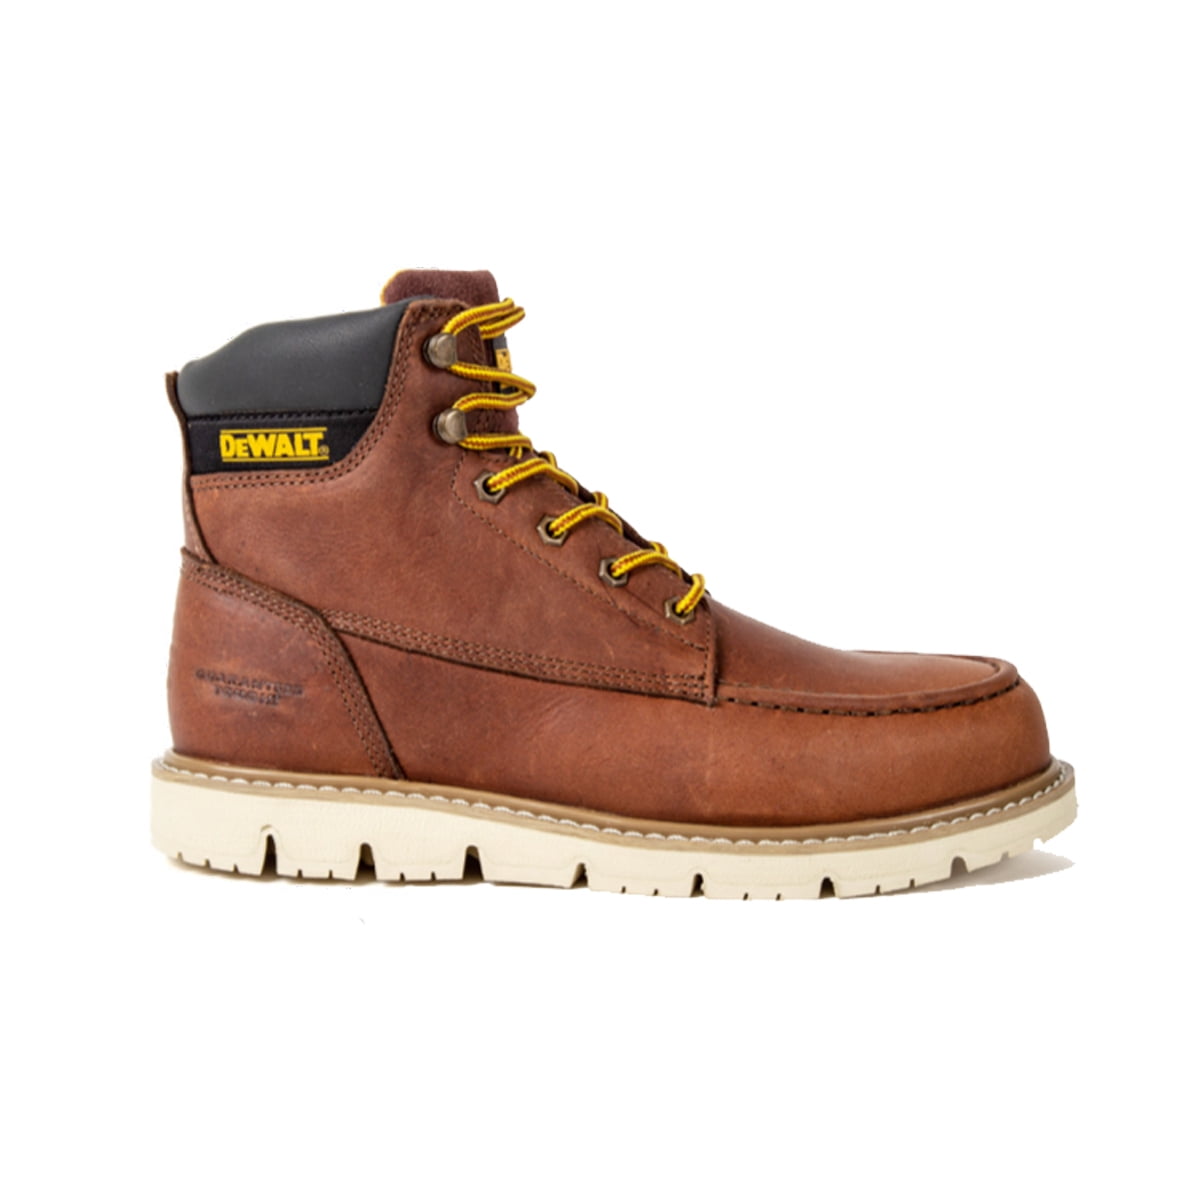 DeWalt Men's Plasma PT(Plain Toe) Work Boots - Walmart.com